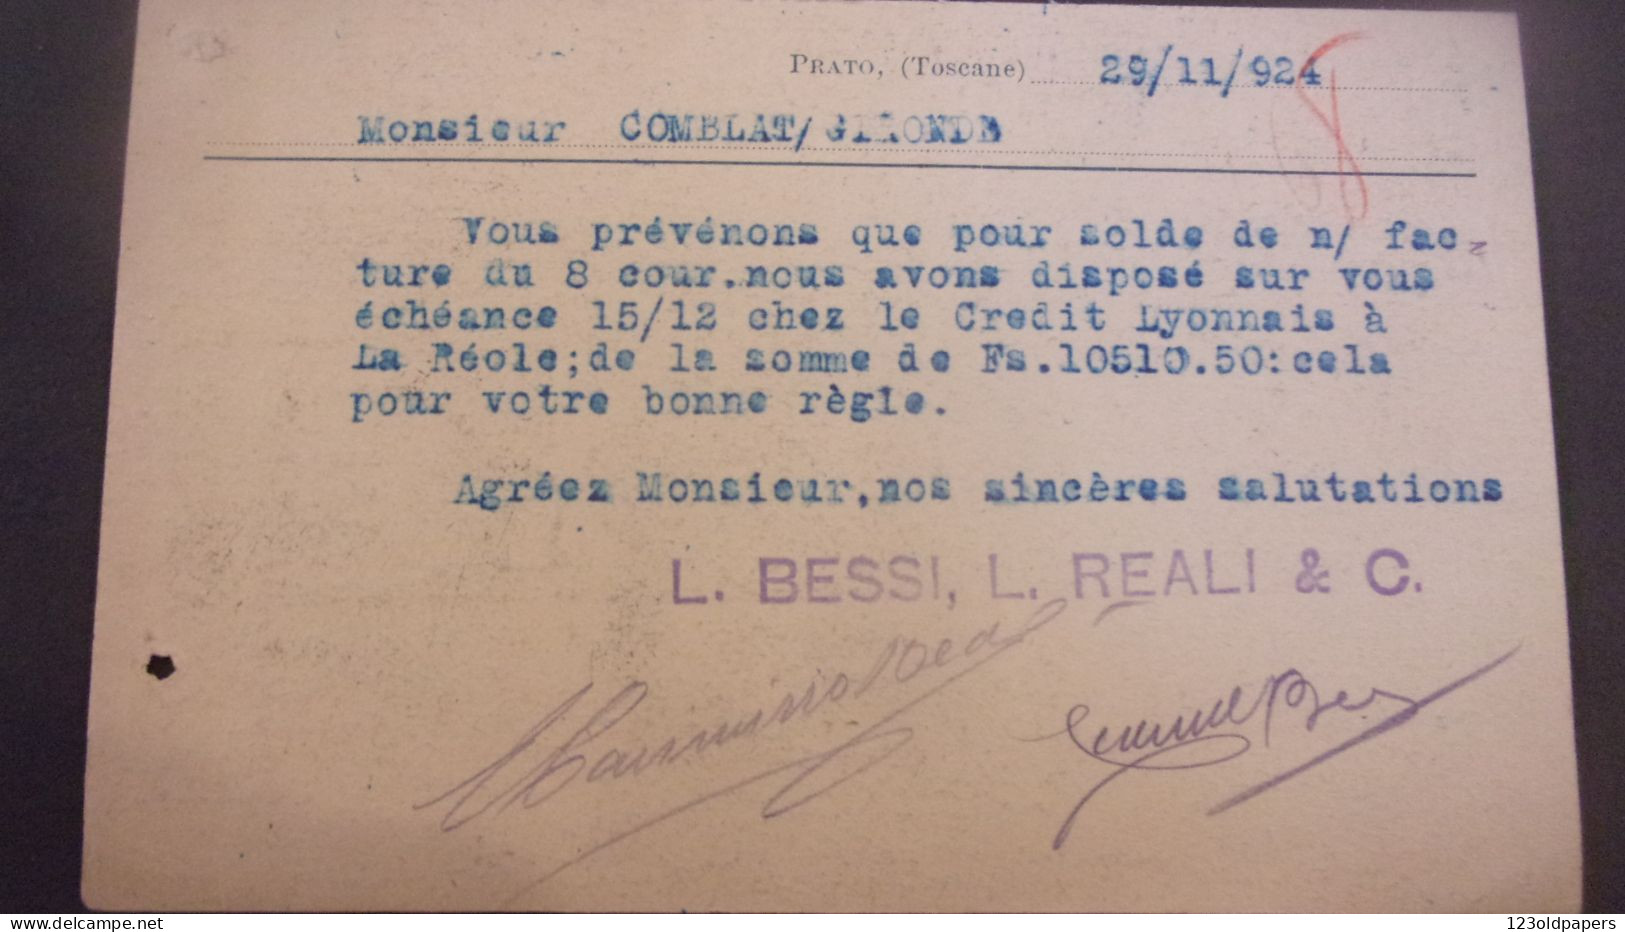 ITALIE PRATO TOSCANO BESSI REALI EXPORTATION DE SORGHO 1924 - Unclassified